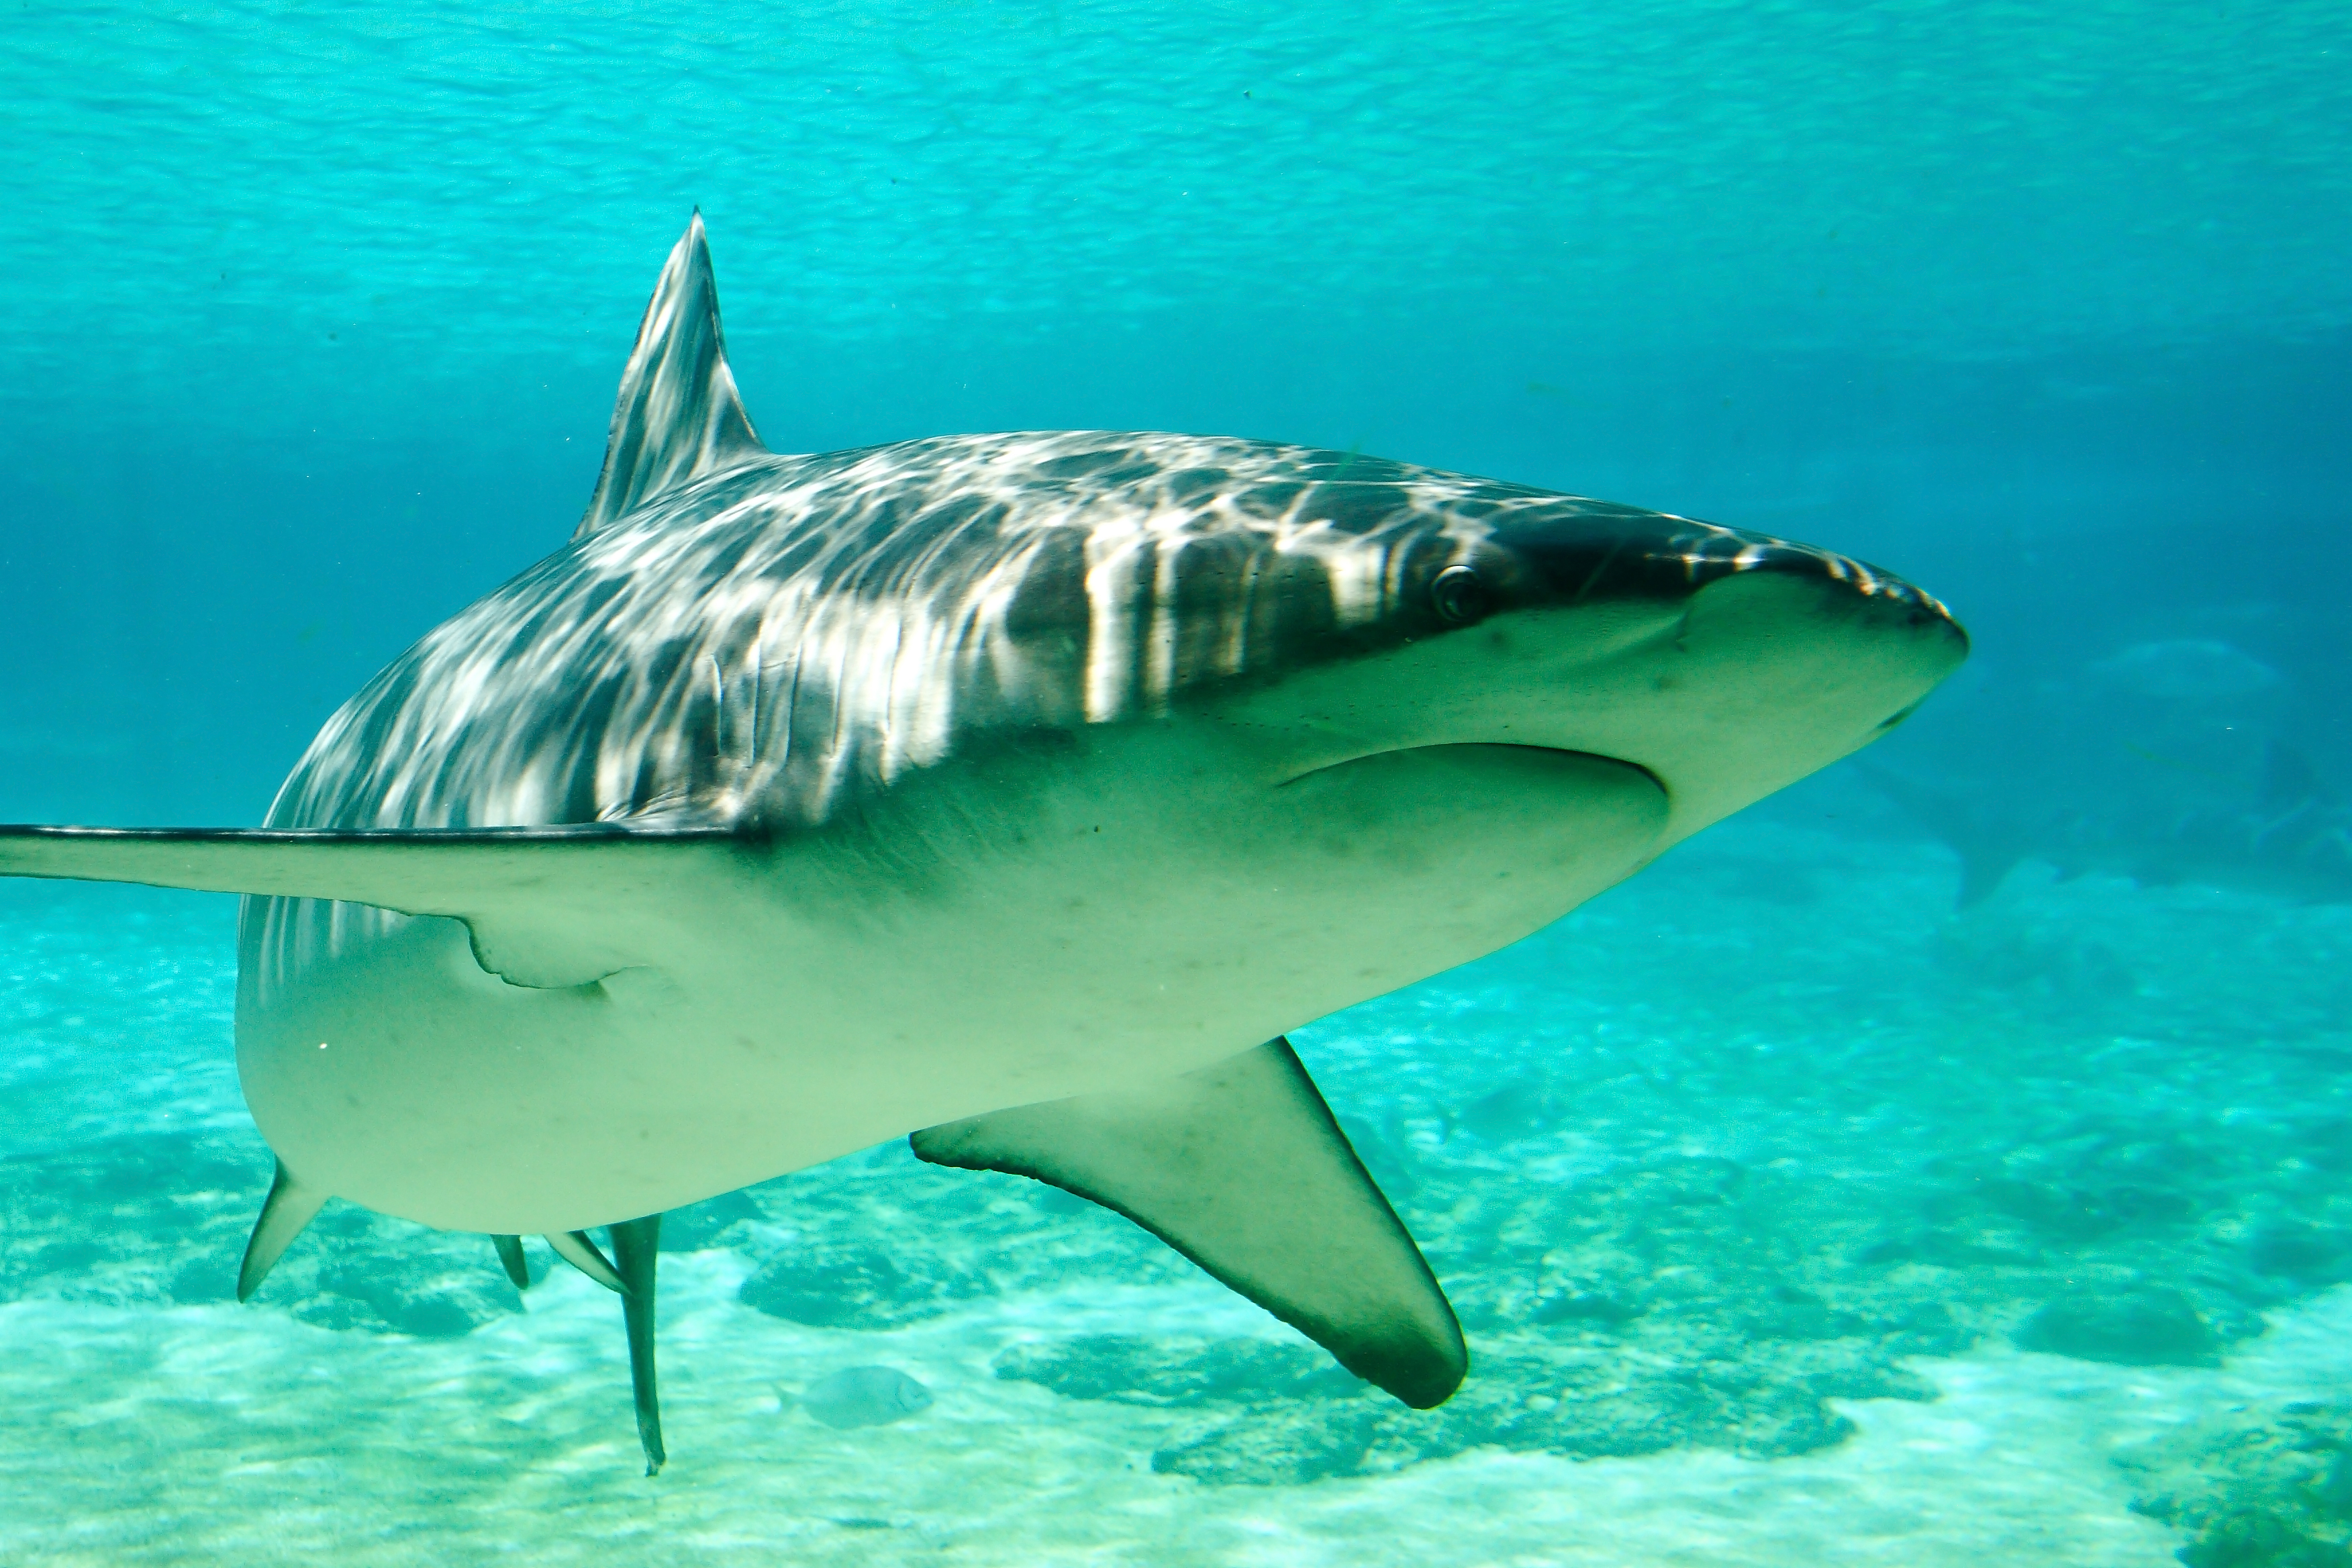 Shark swimming under water. Photo Credit: Steve Garner